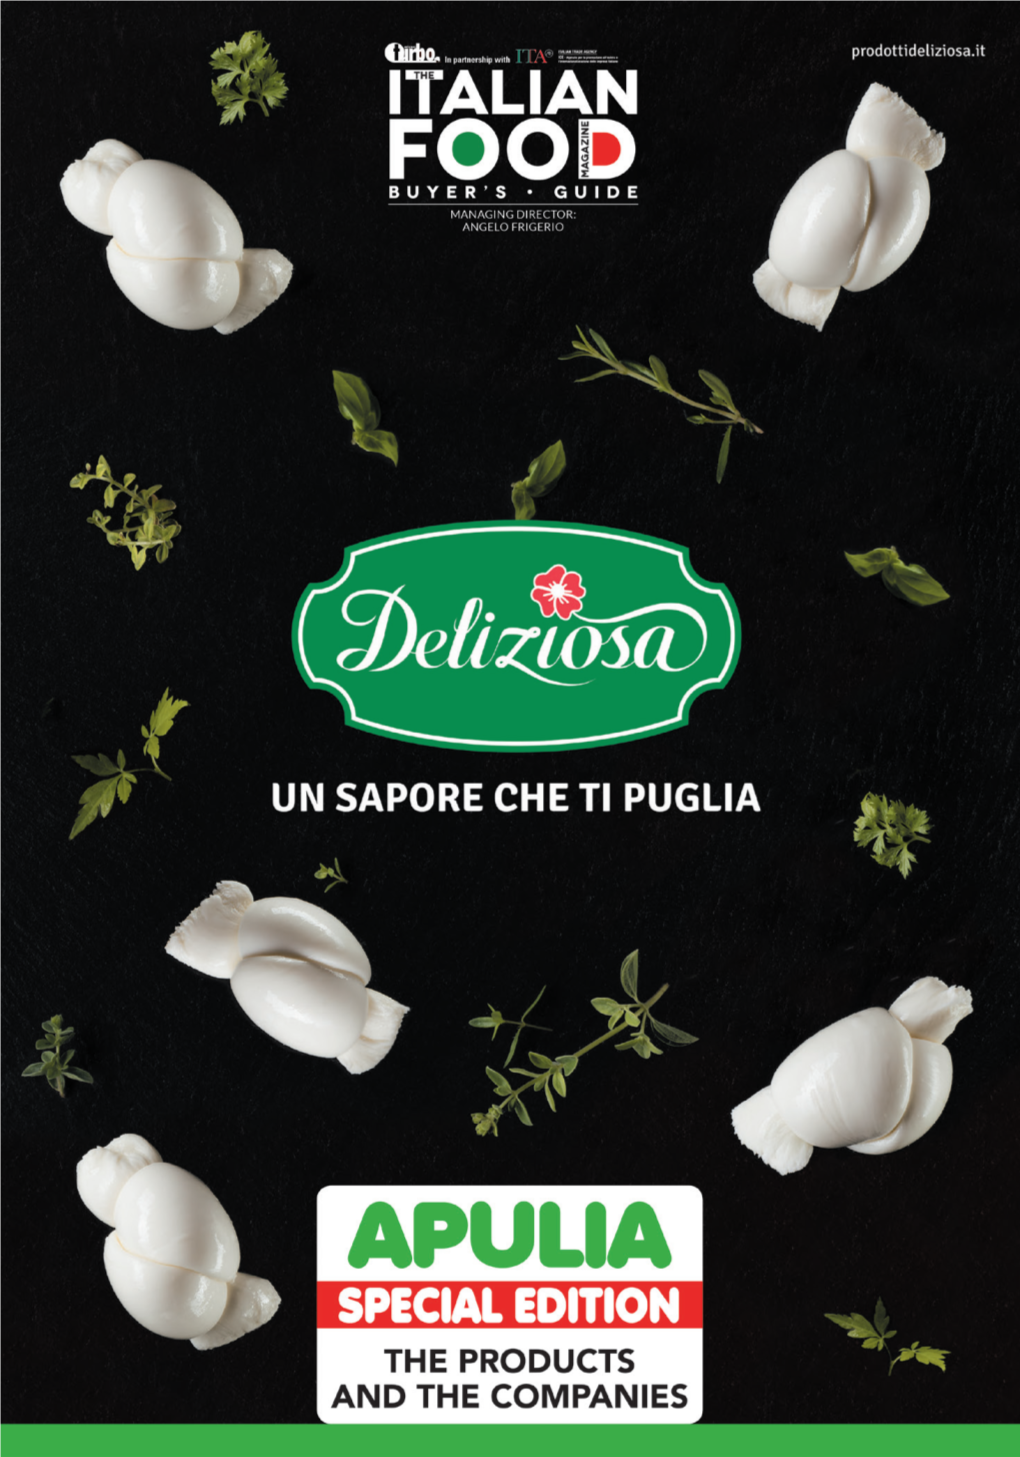 Italian Buyer's • Guide Foodm a Gazine